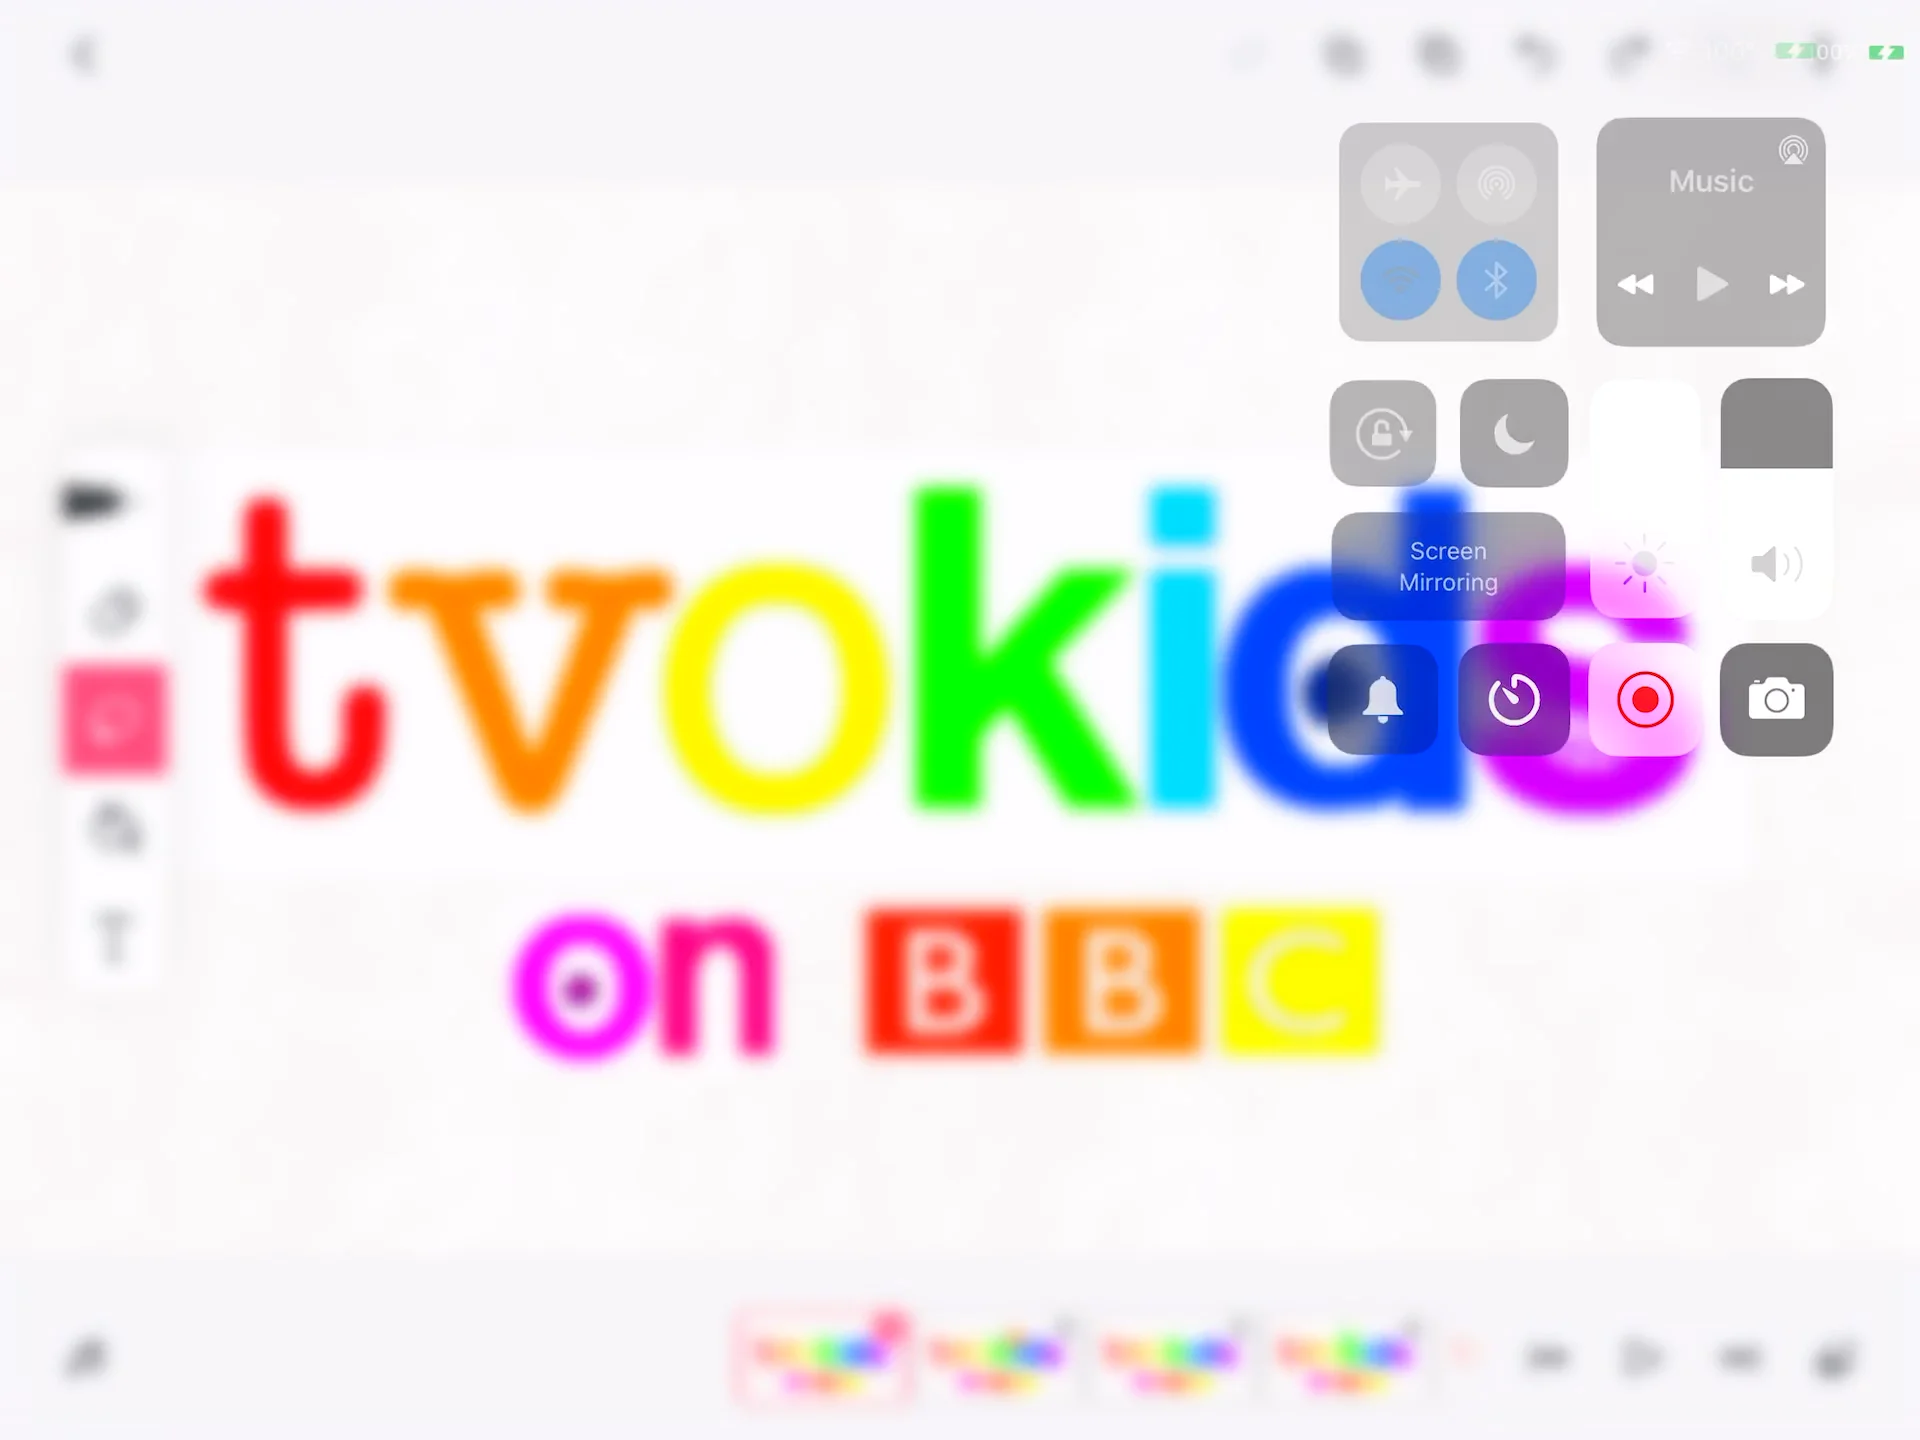 Jack's TVOKids On BBC Logo Bloopers Take 9: The Ending Gone Wrong